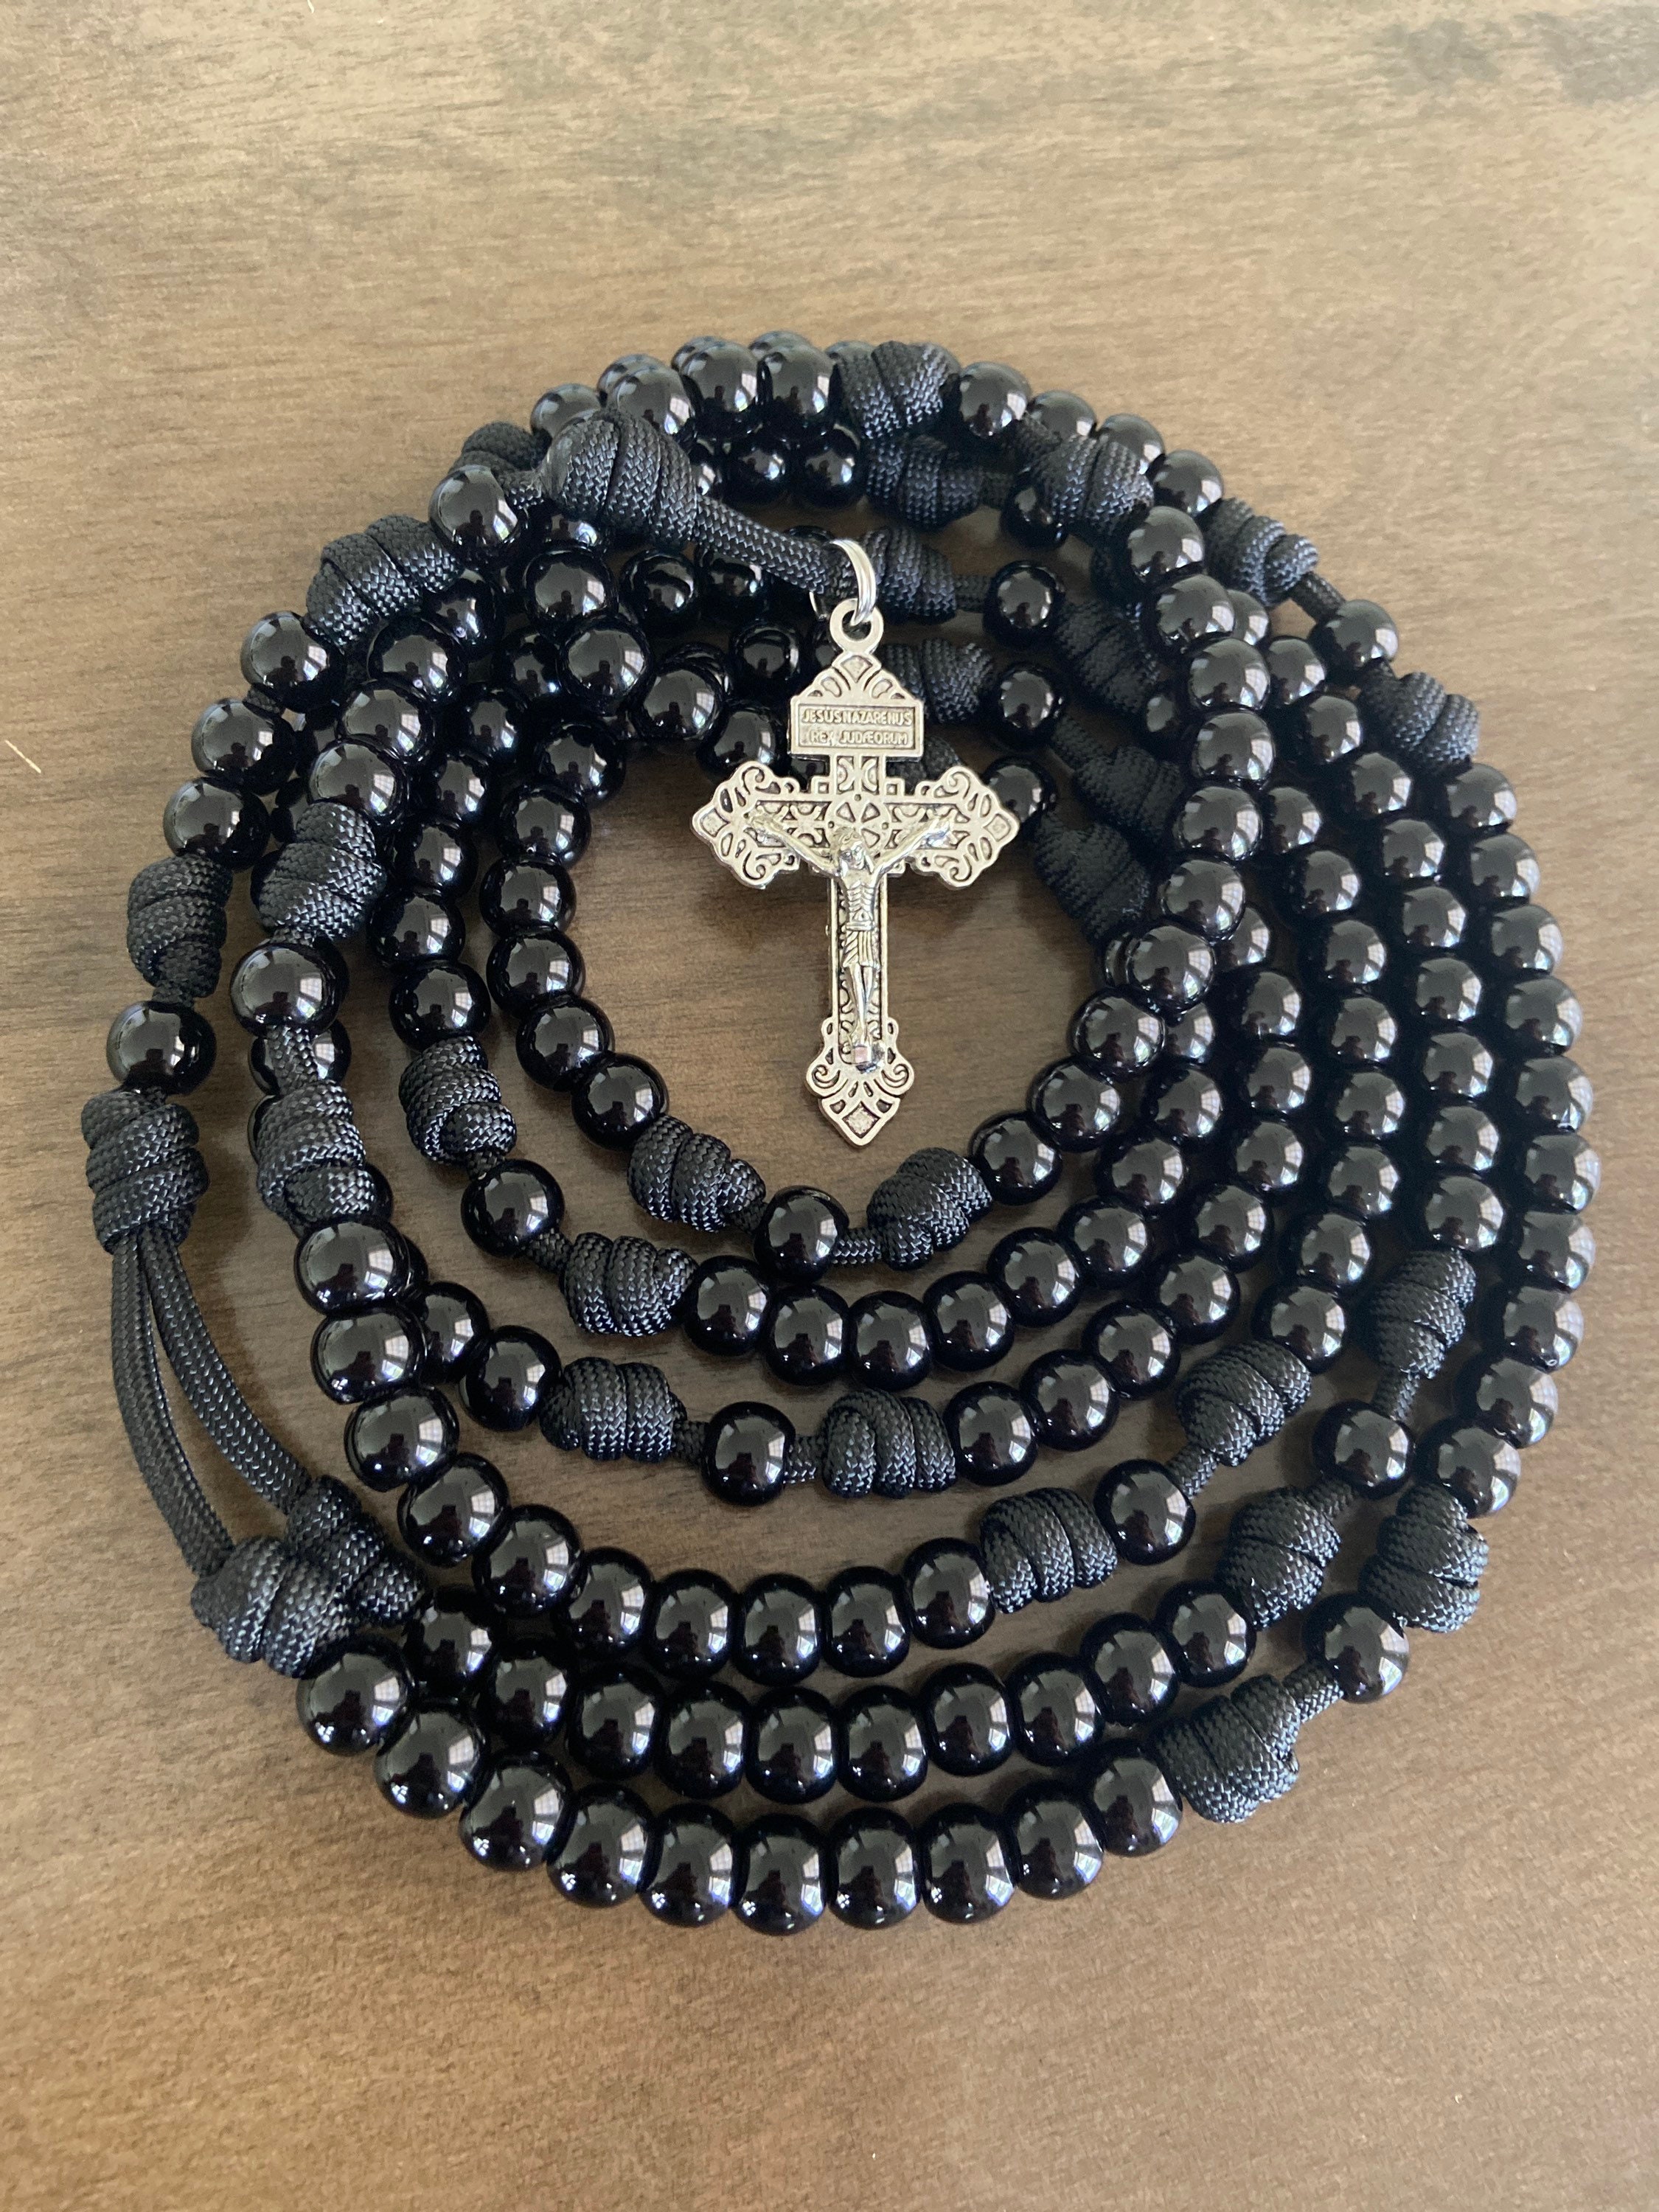 15 or 20 Decade Catholic Rosary Black Beads Rosary Durable - Etsy